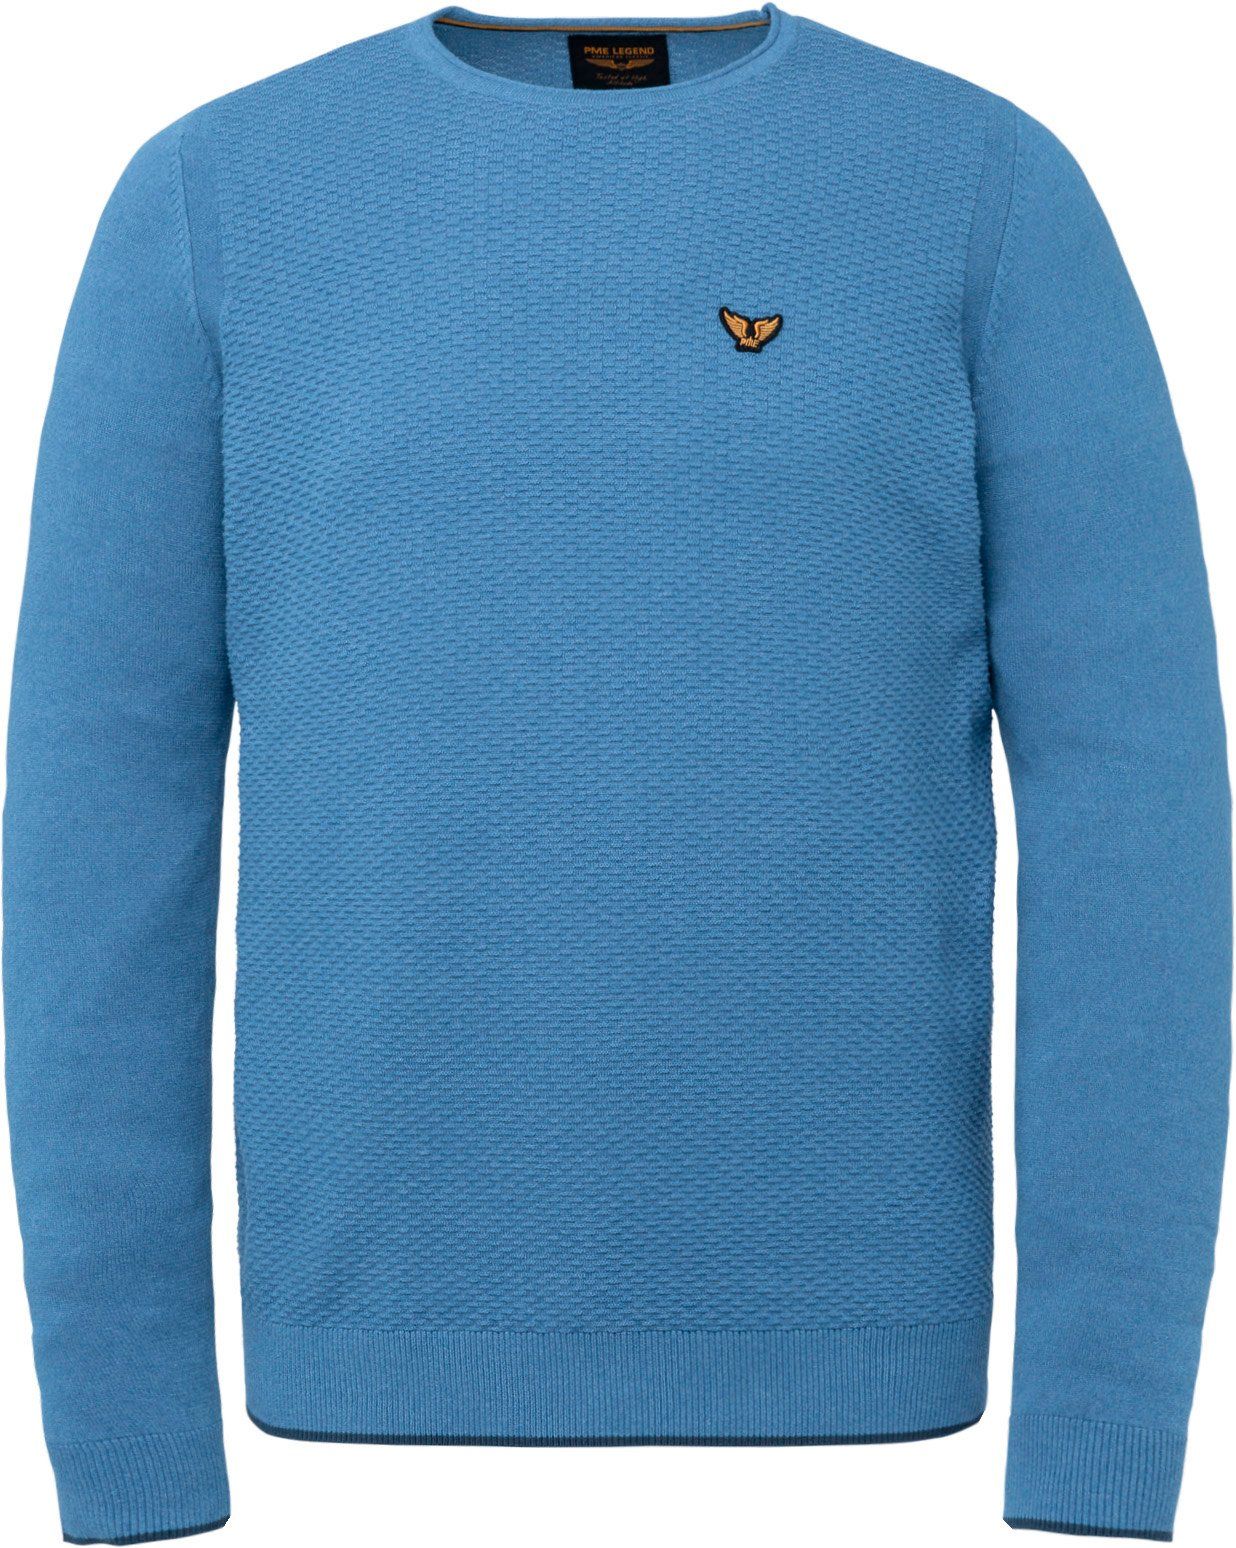 PME Legend Sweater Mouline Blue size 3XL